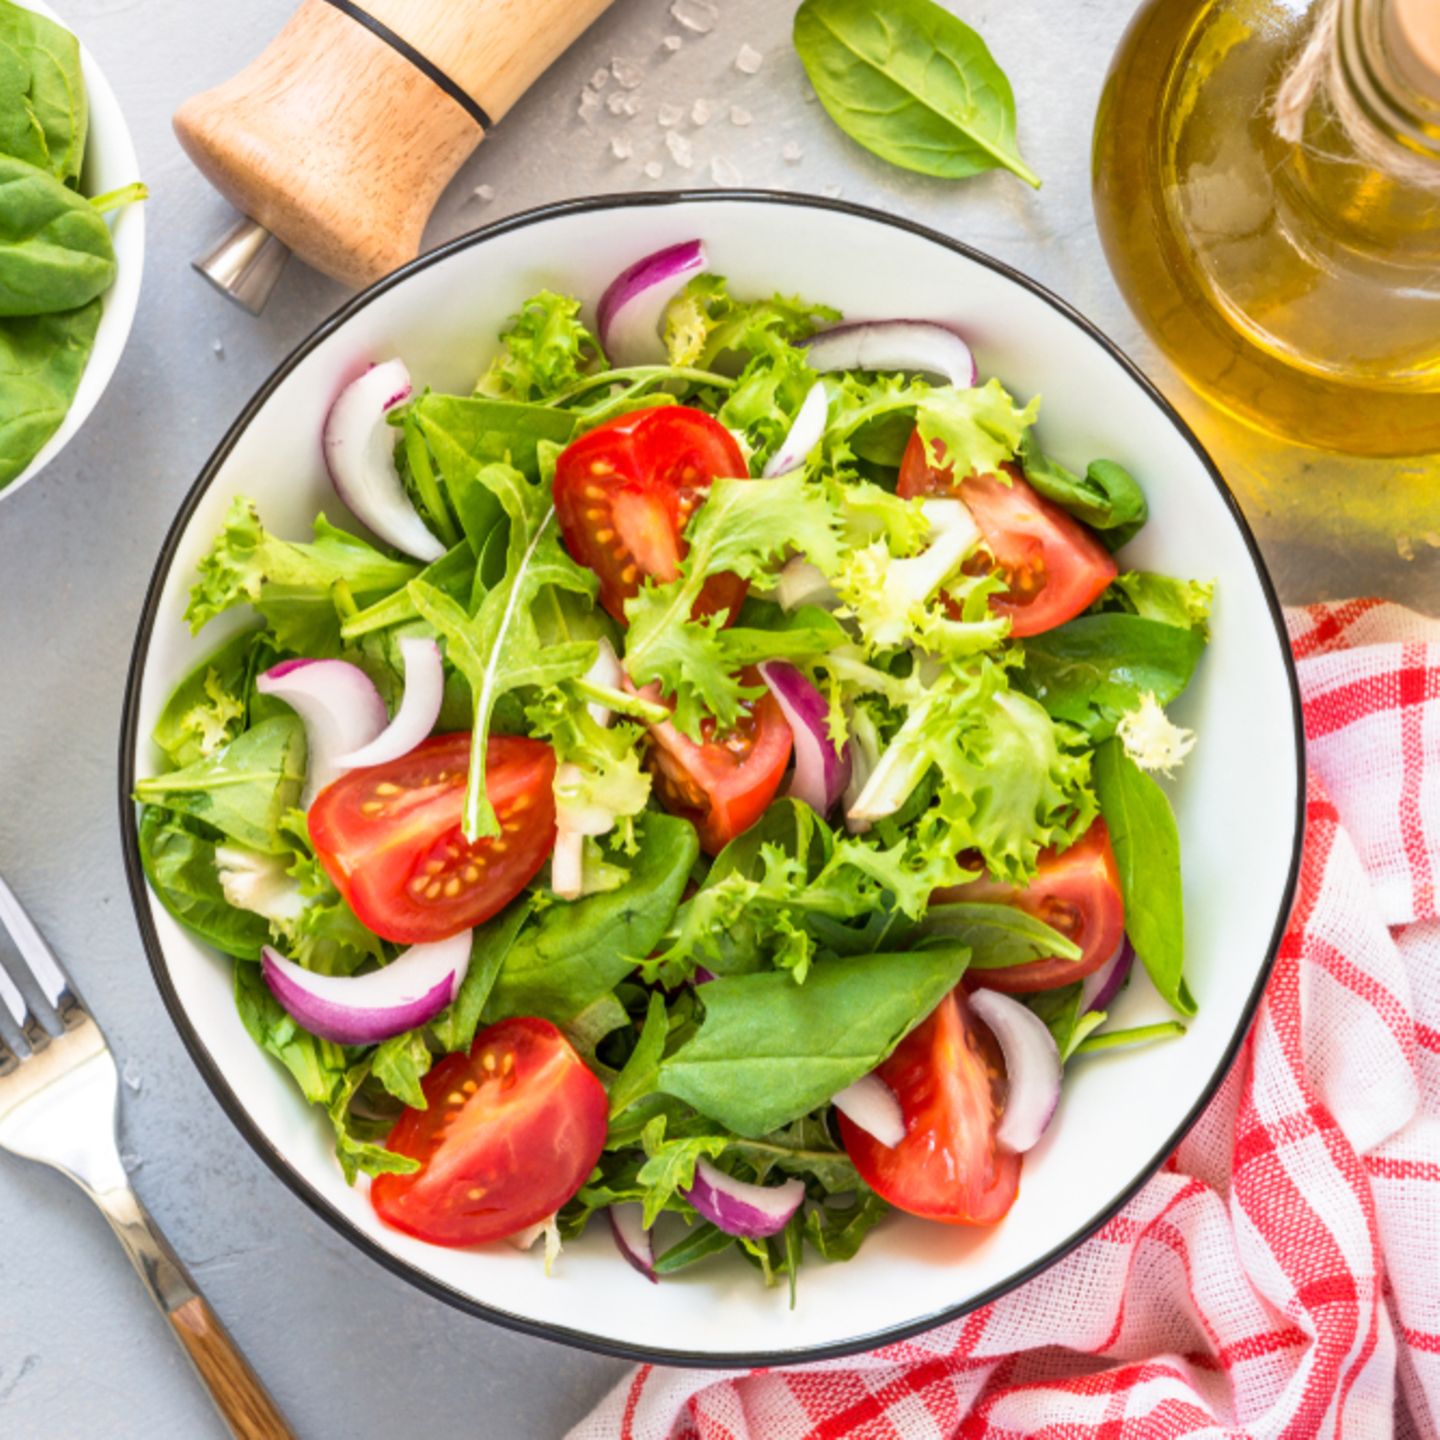 Ernährung ab 60: Salat